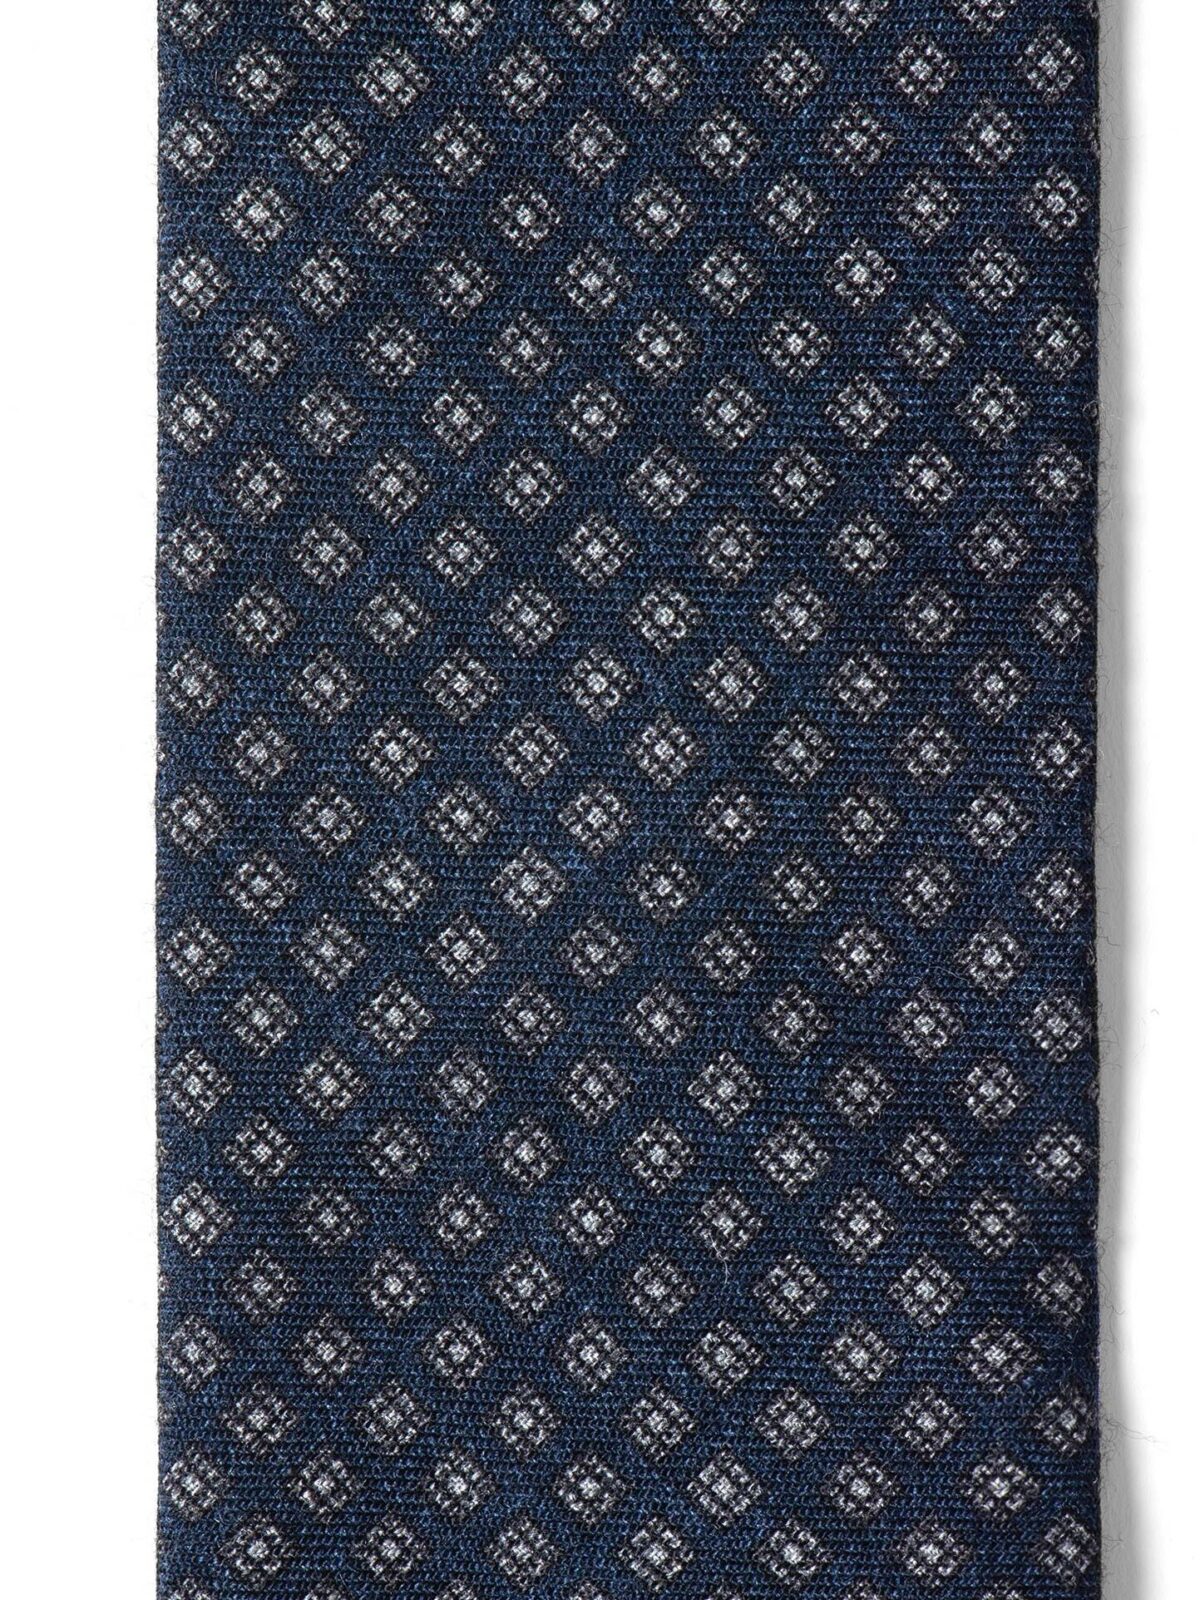 Navy and Grey Foulard Wool Tie